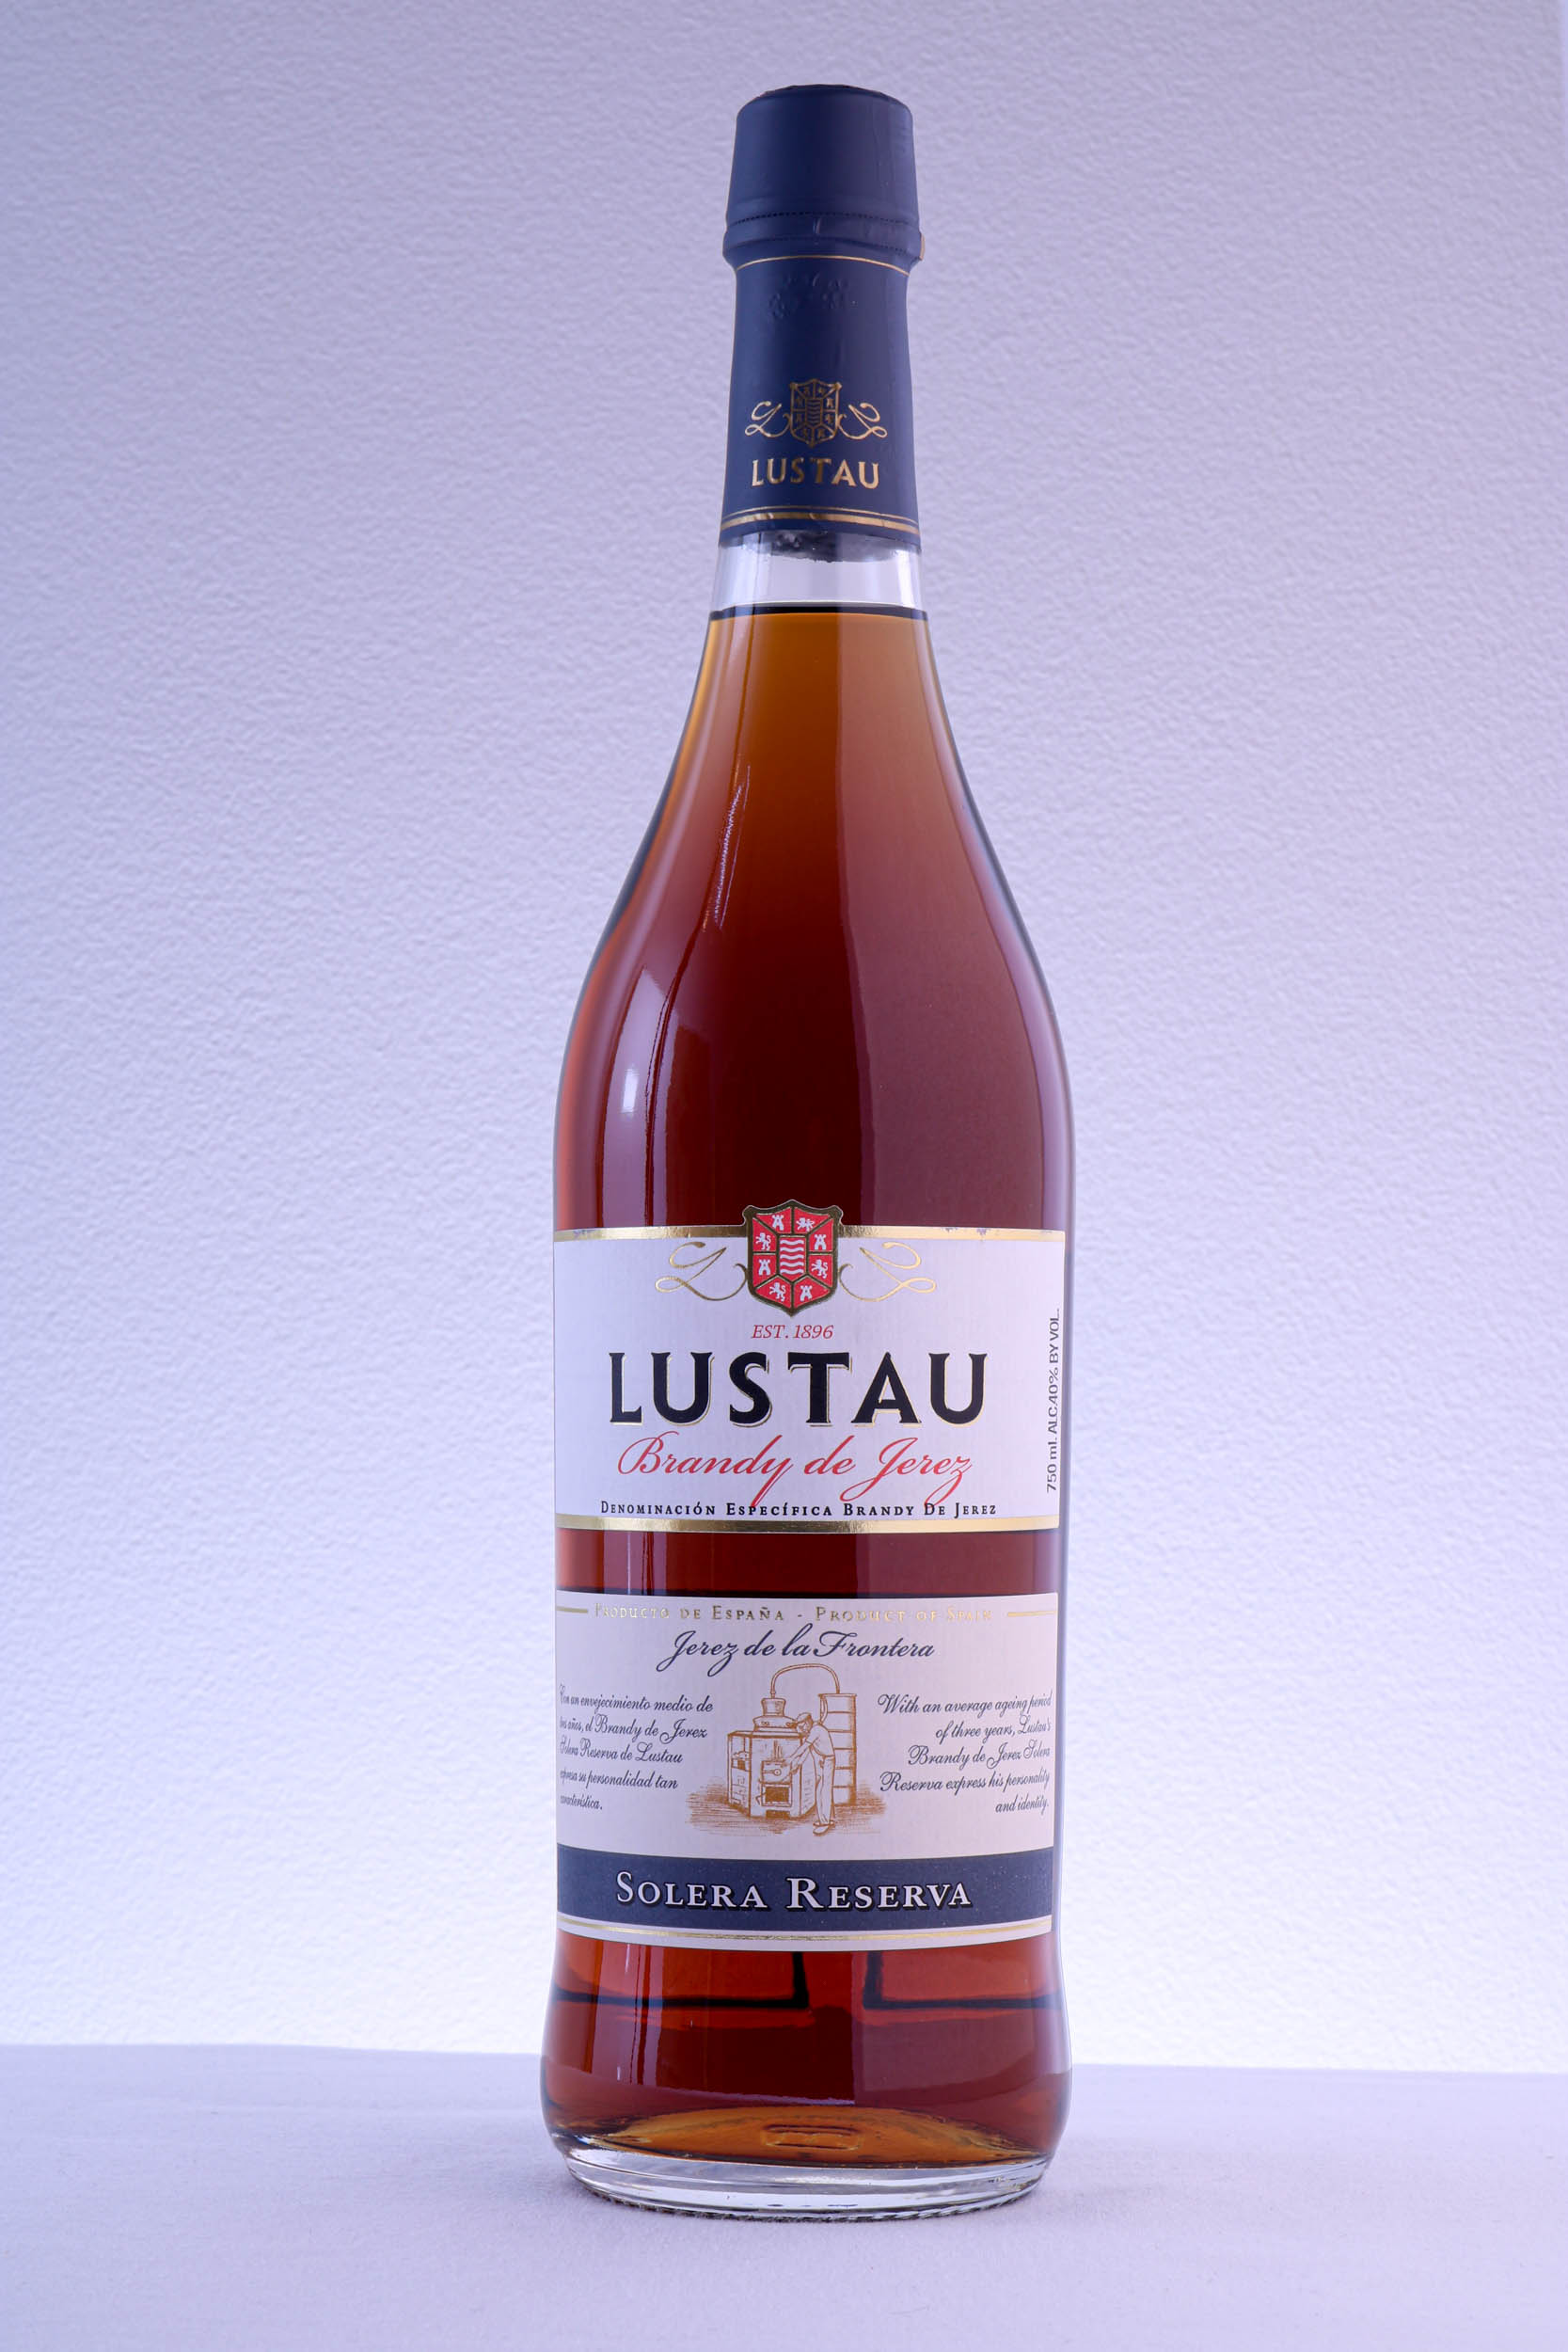 Lustau Brandy de Jerez Solera Reserva